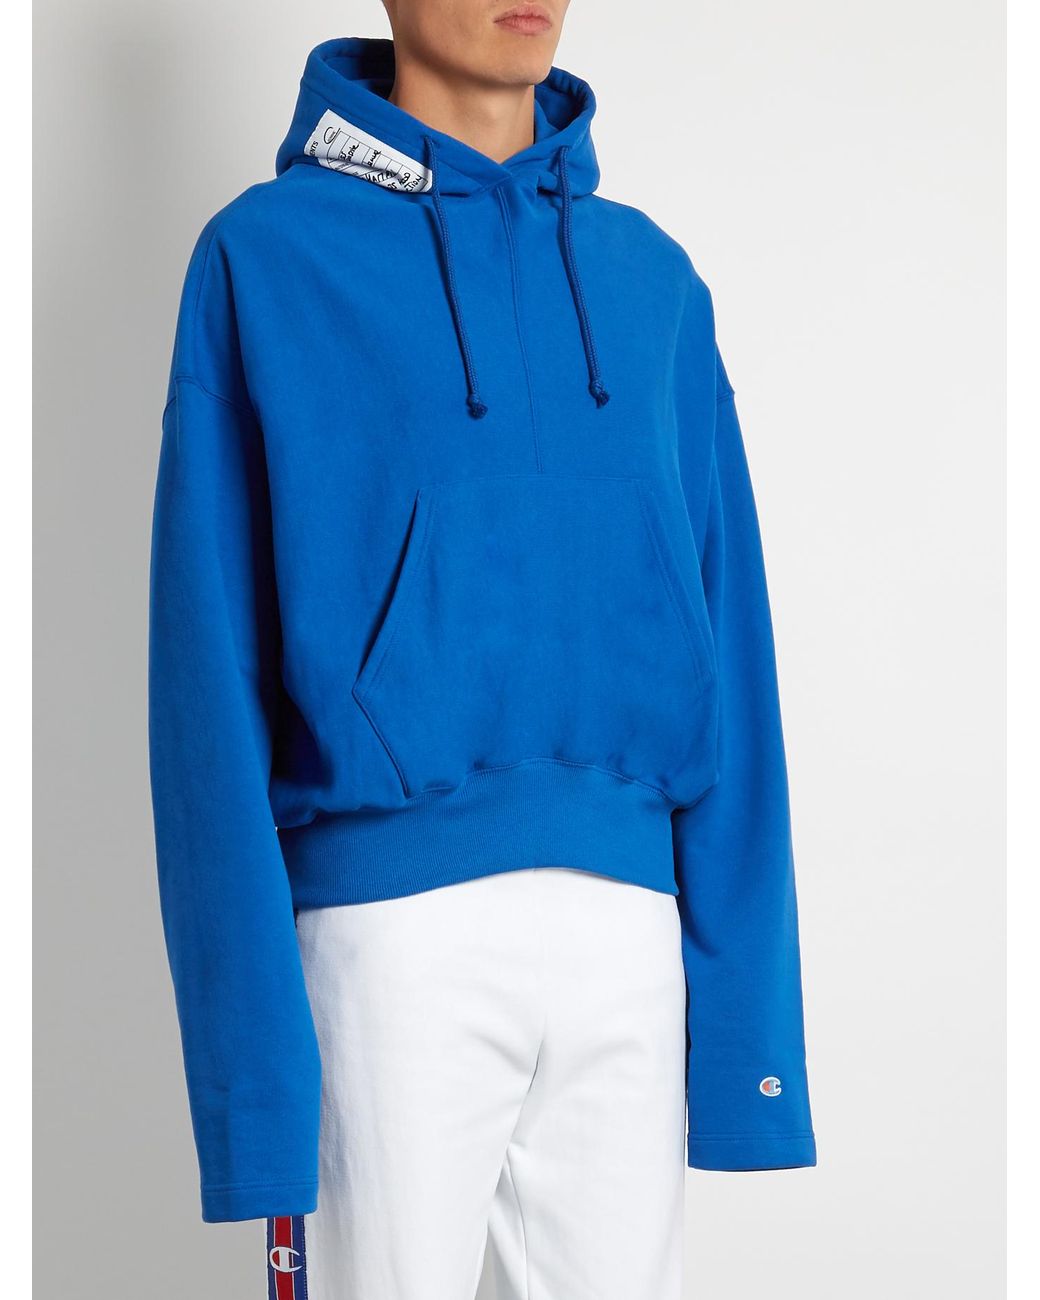 Vetements X Champion Hooded Oversized Sweatshirt in Blue for Men